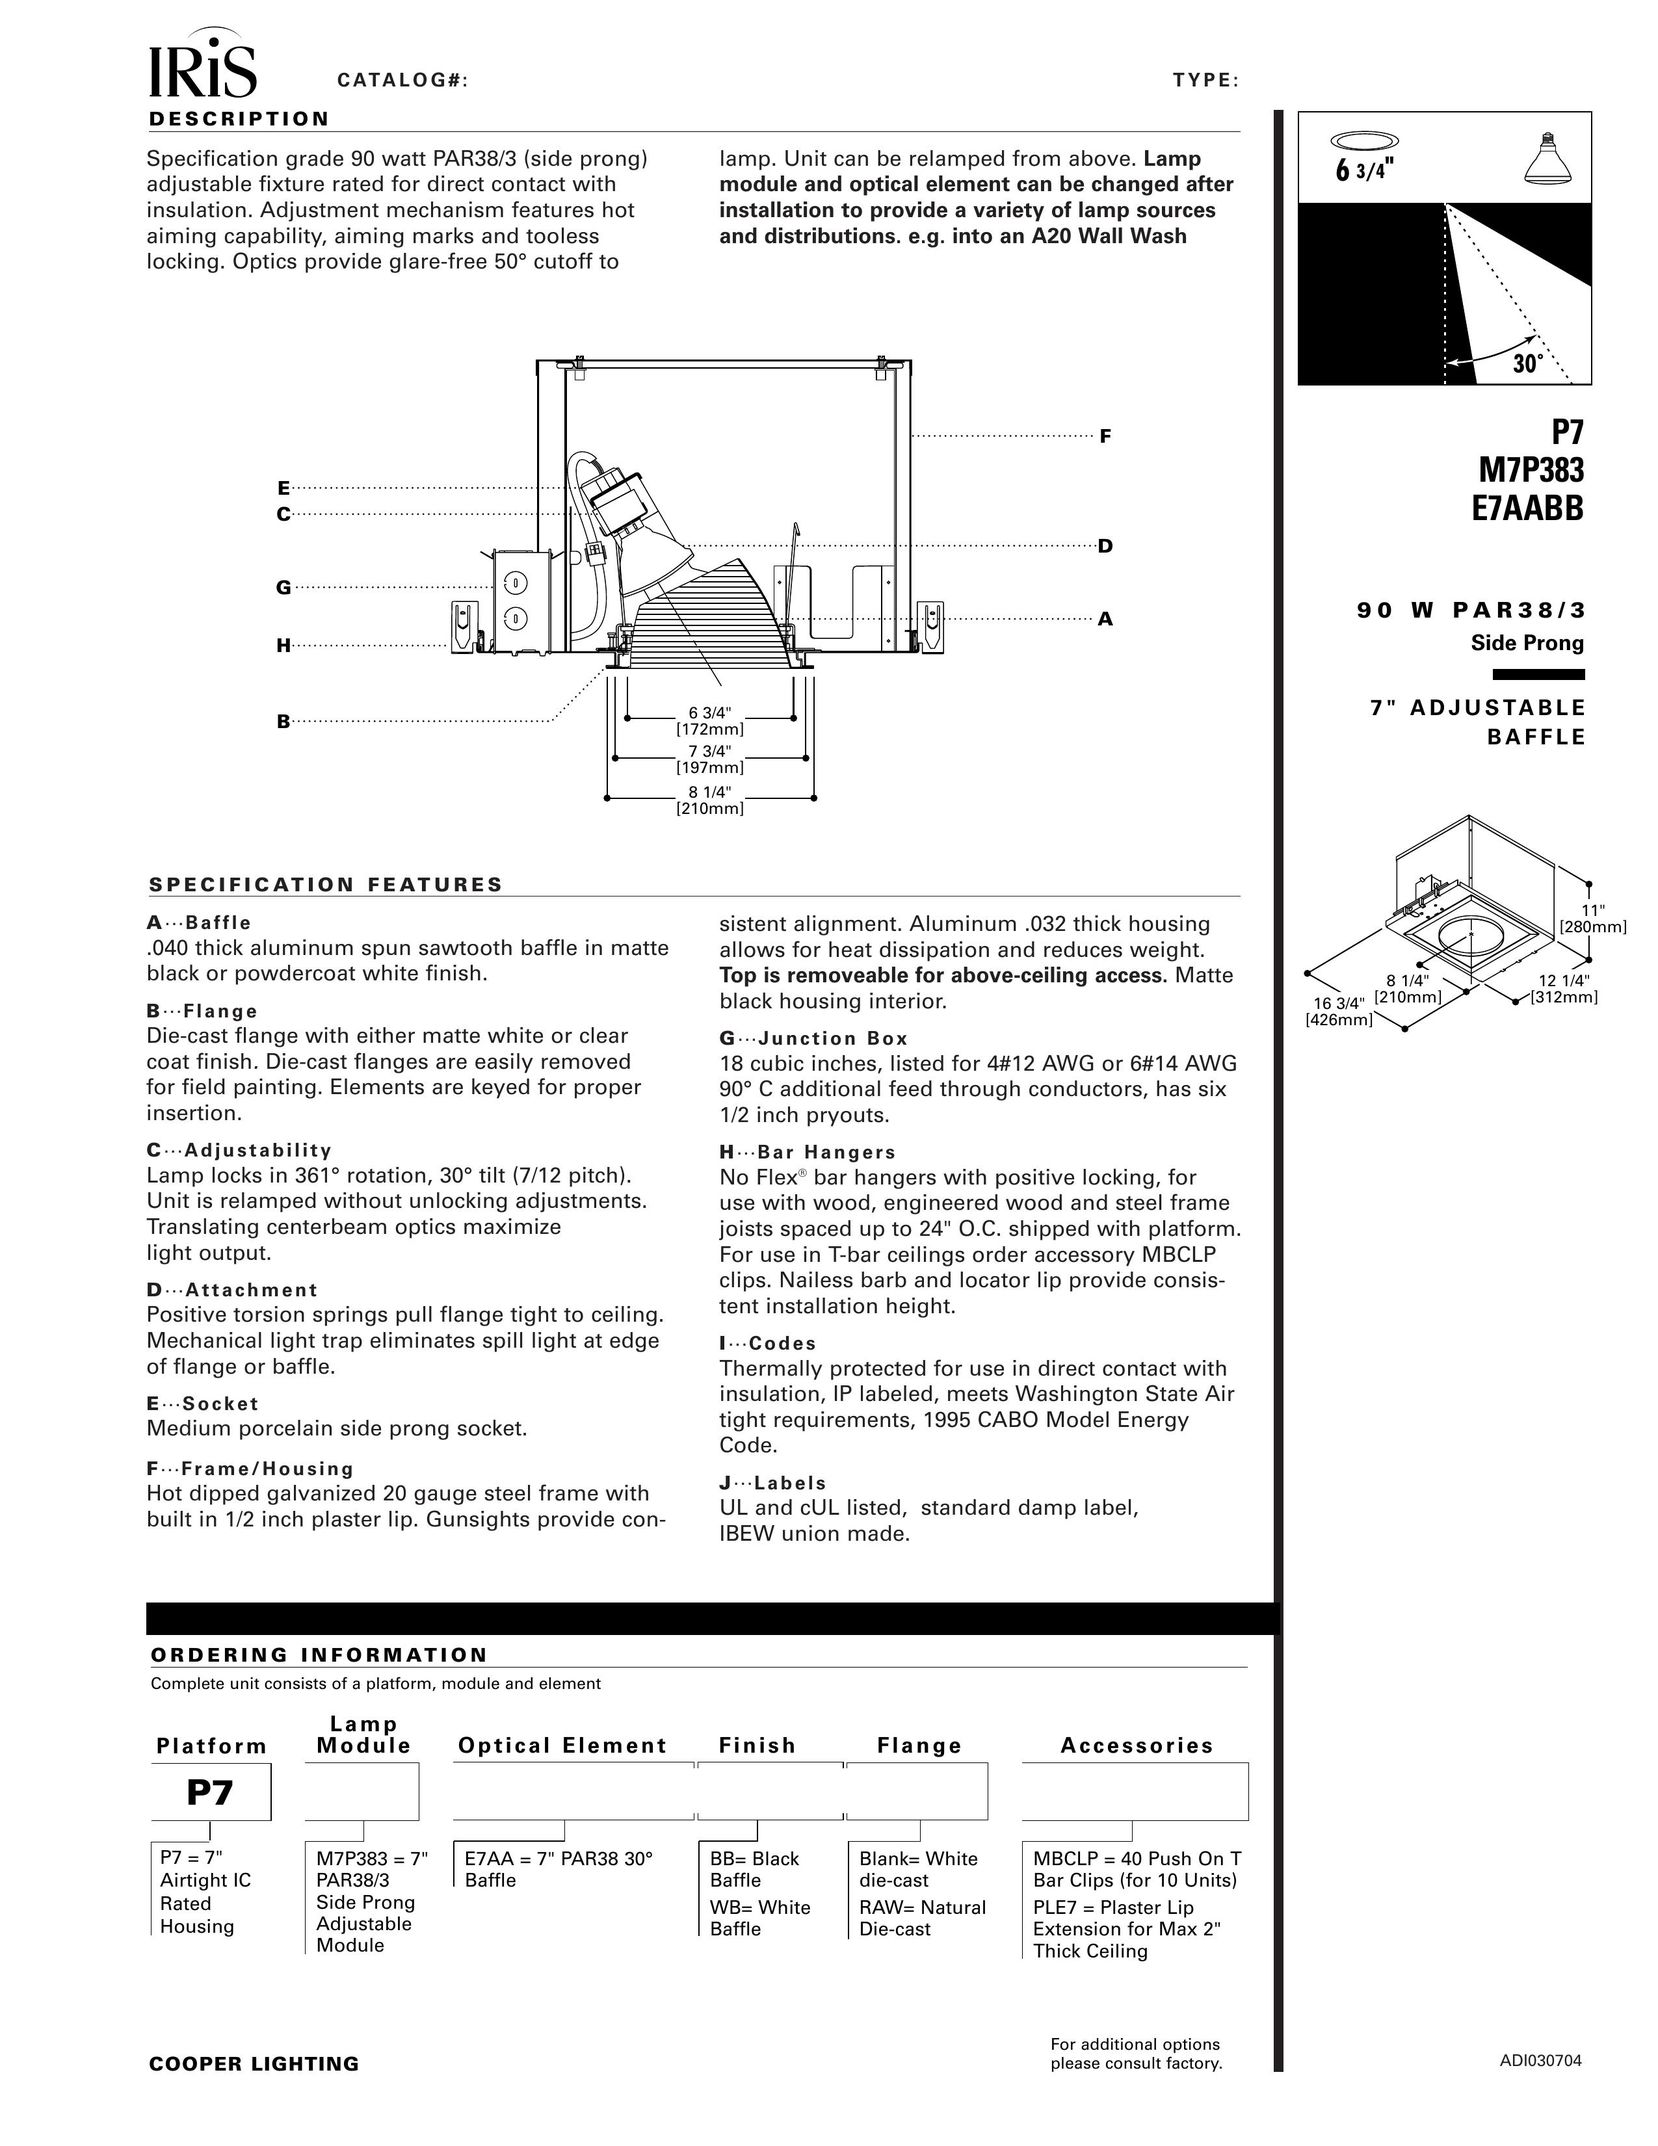 IRIS E7AABB Indoor Furnishings User Manual